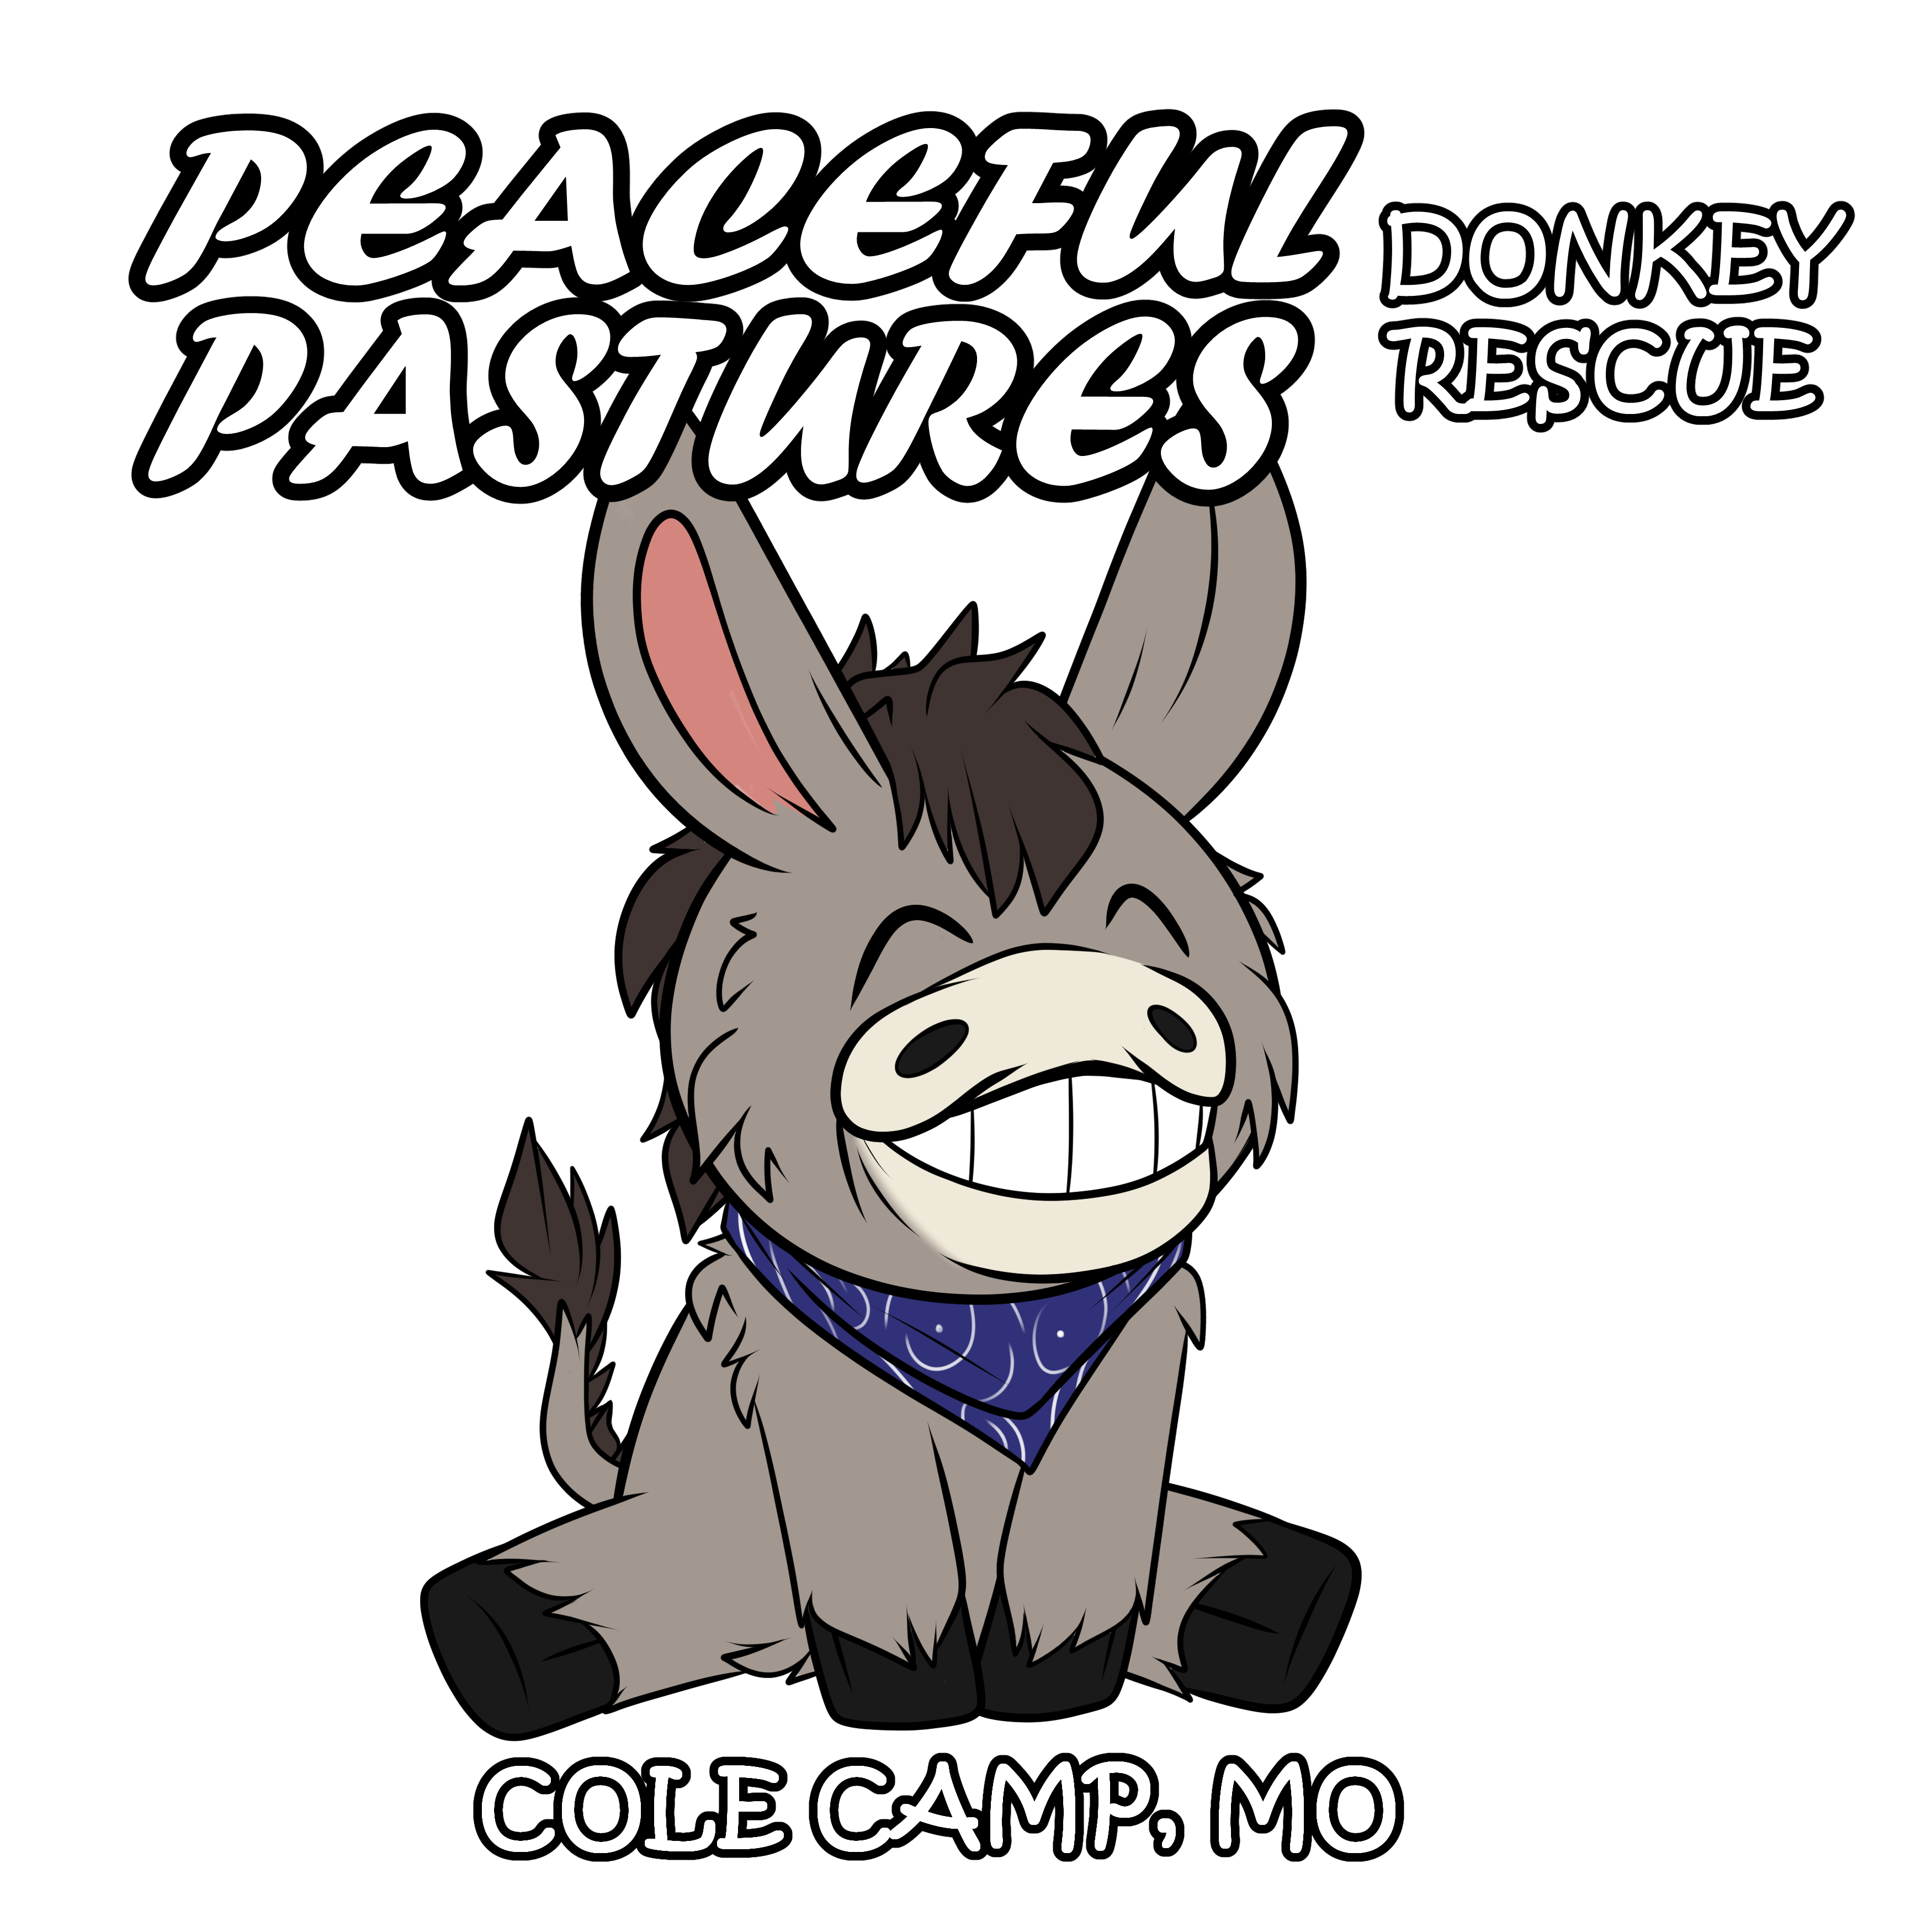 Peaceful Pastures Donkey Rescue